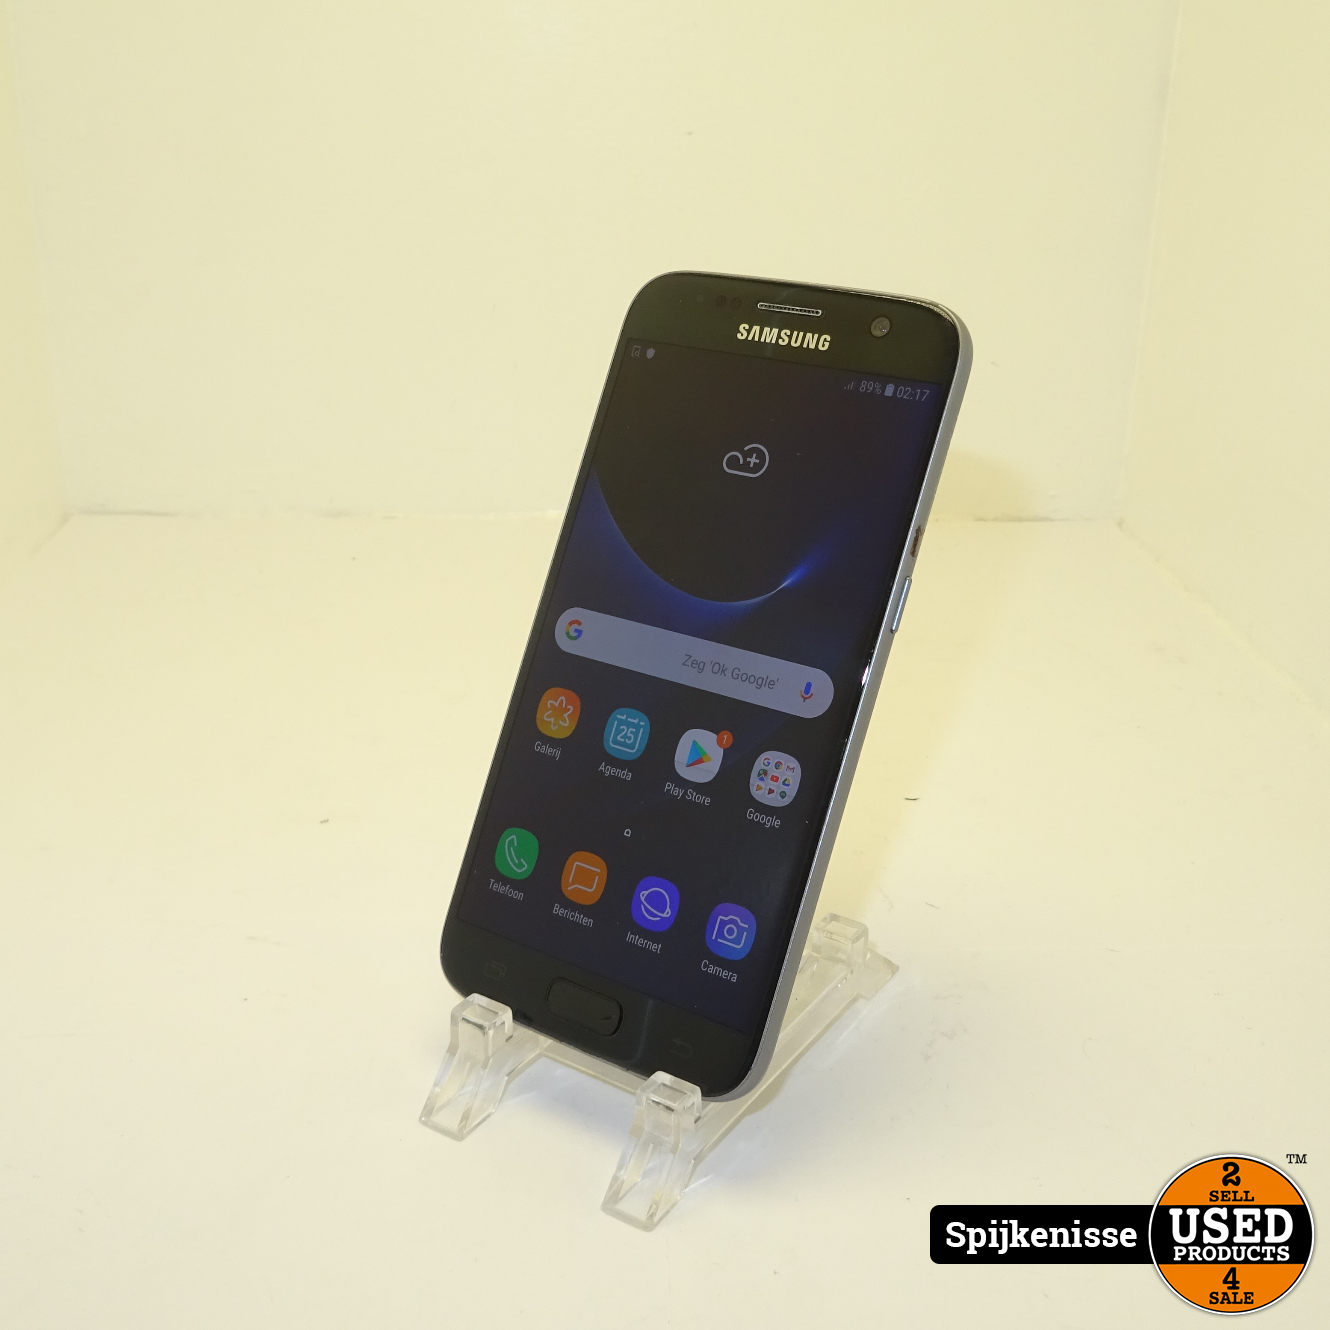 Methode Beperking Overtollig Samsung Galaxy S7 32GB Black *806068* - Used Products Spijkenisse